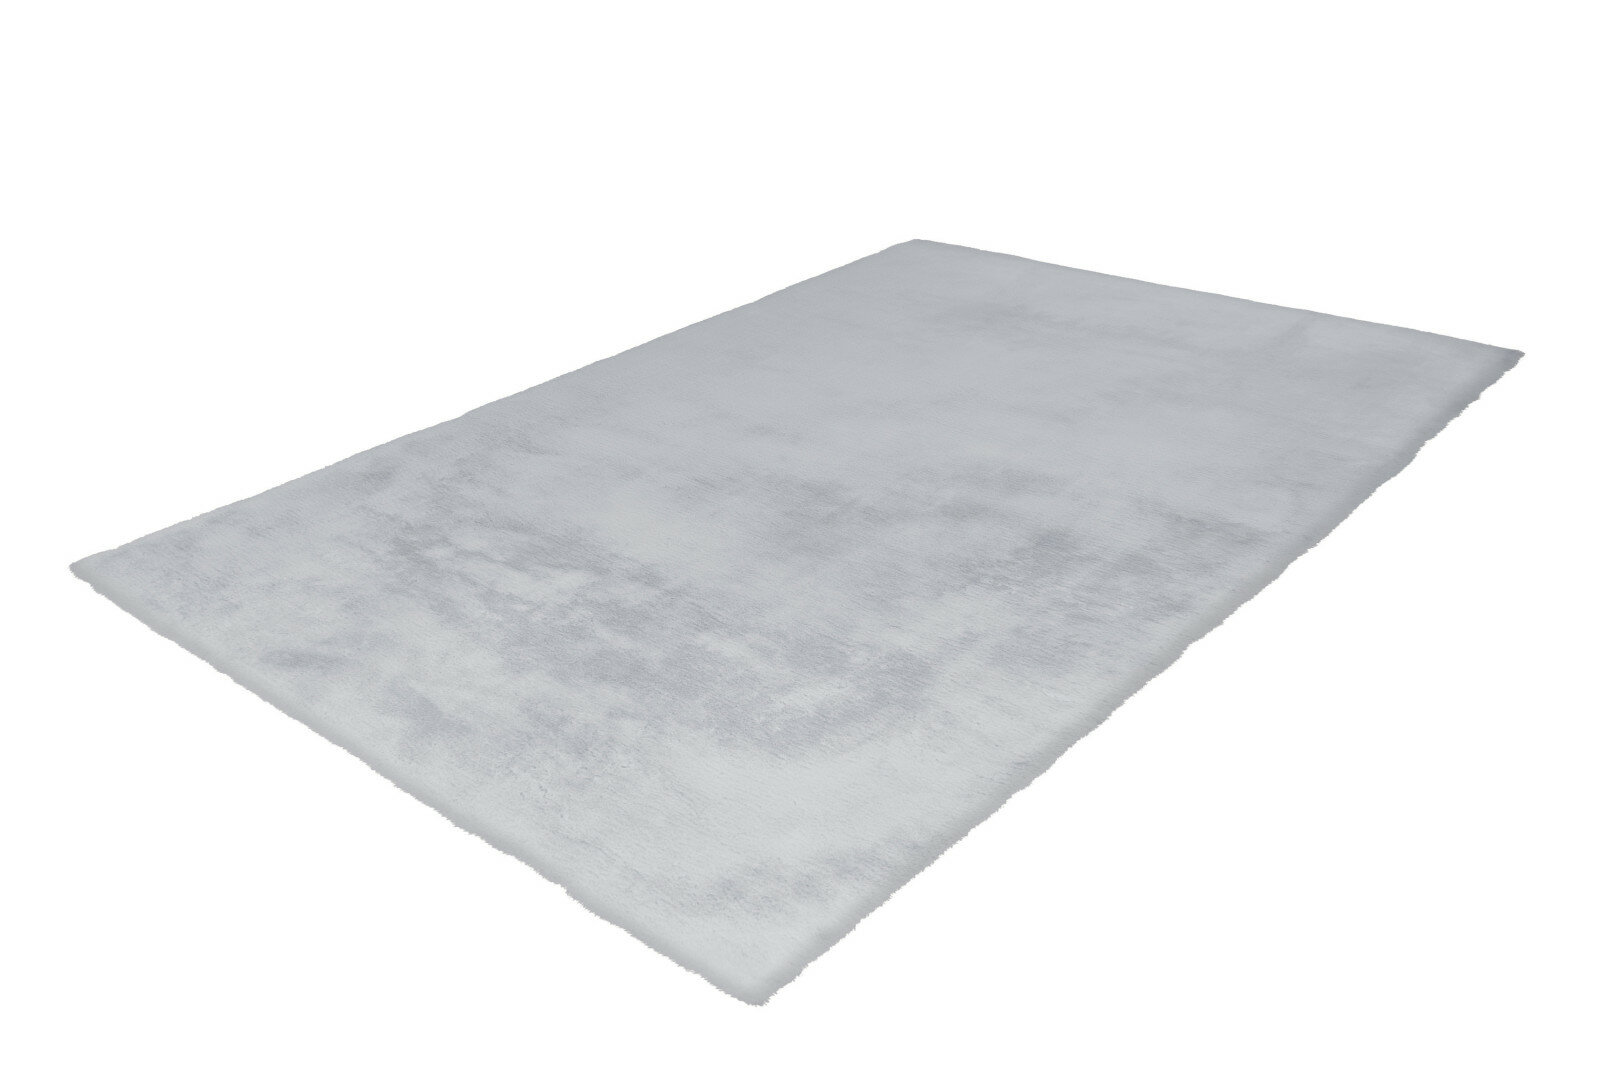 Kunstfell-Teppich - Kaninchenfell-Haptik - grau-blau - 160x230 cm | Online  bei ROLLER kaufen